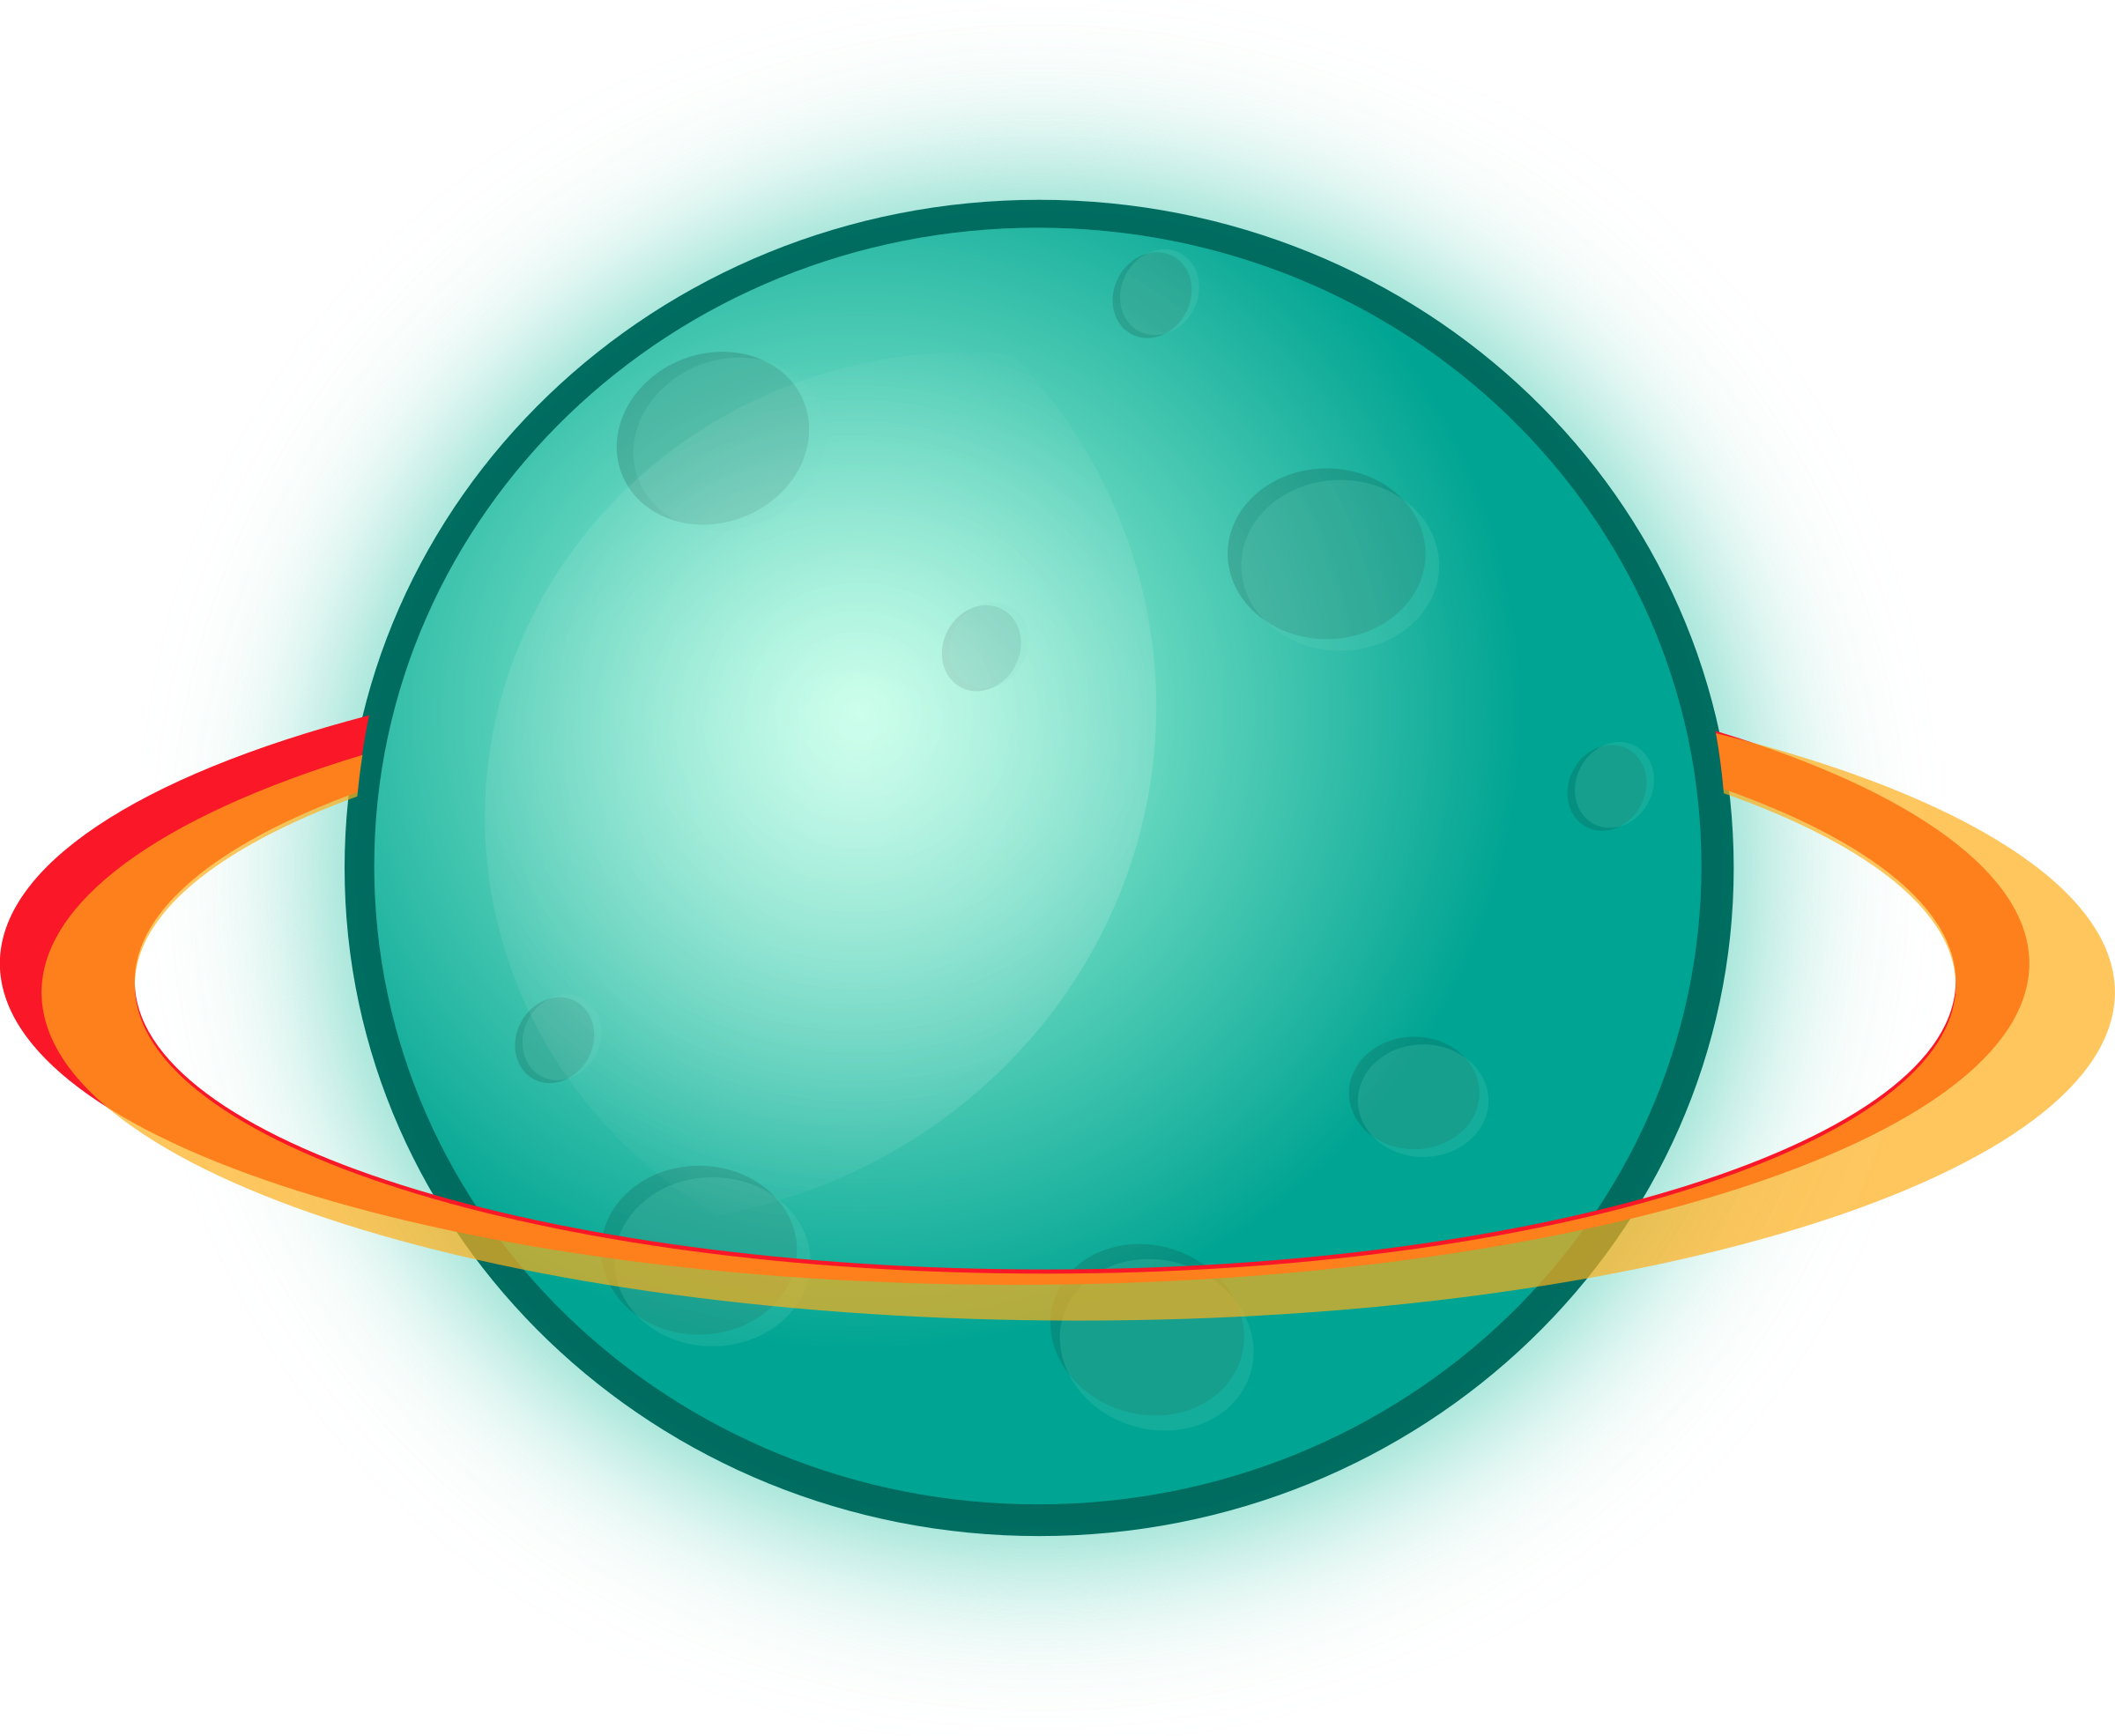 Stylized Planet Illustration PNG image